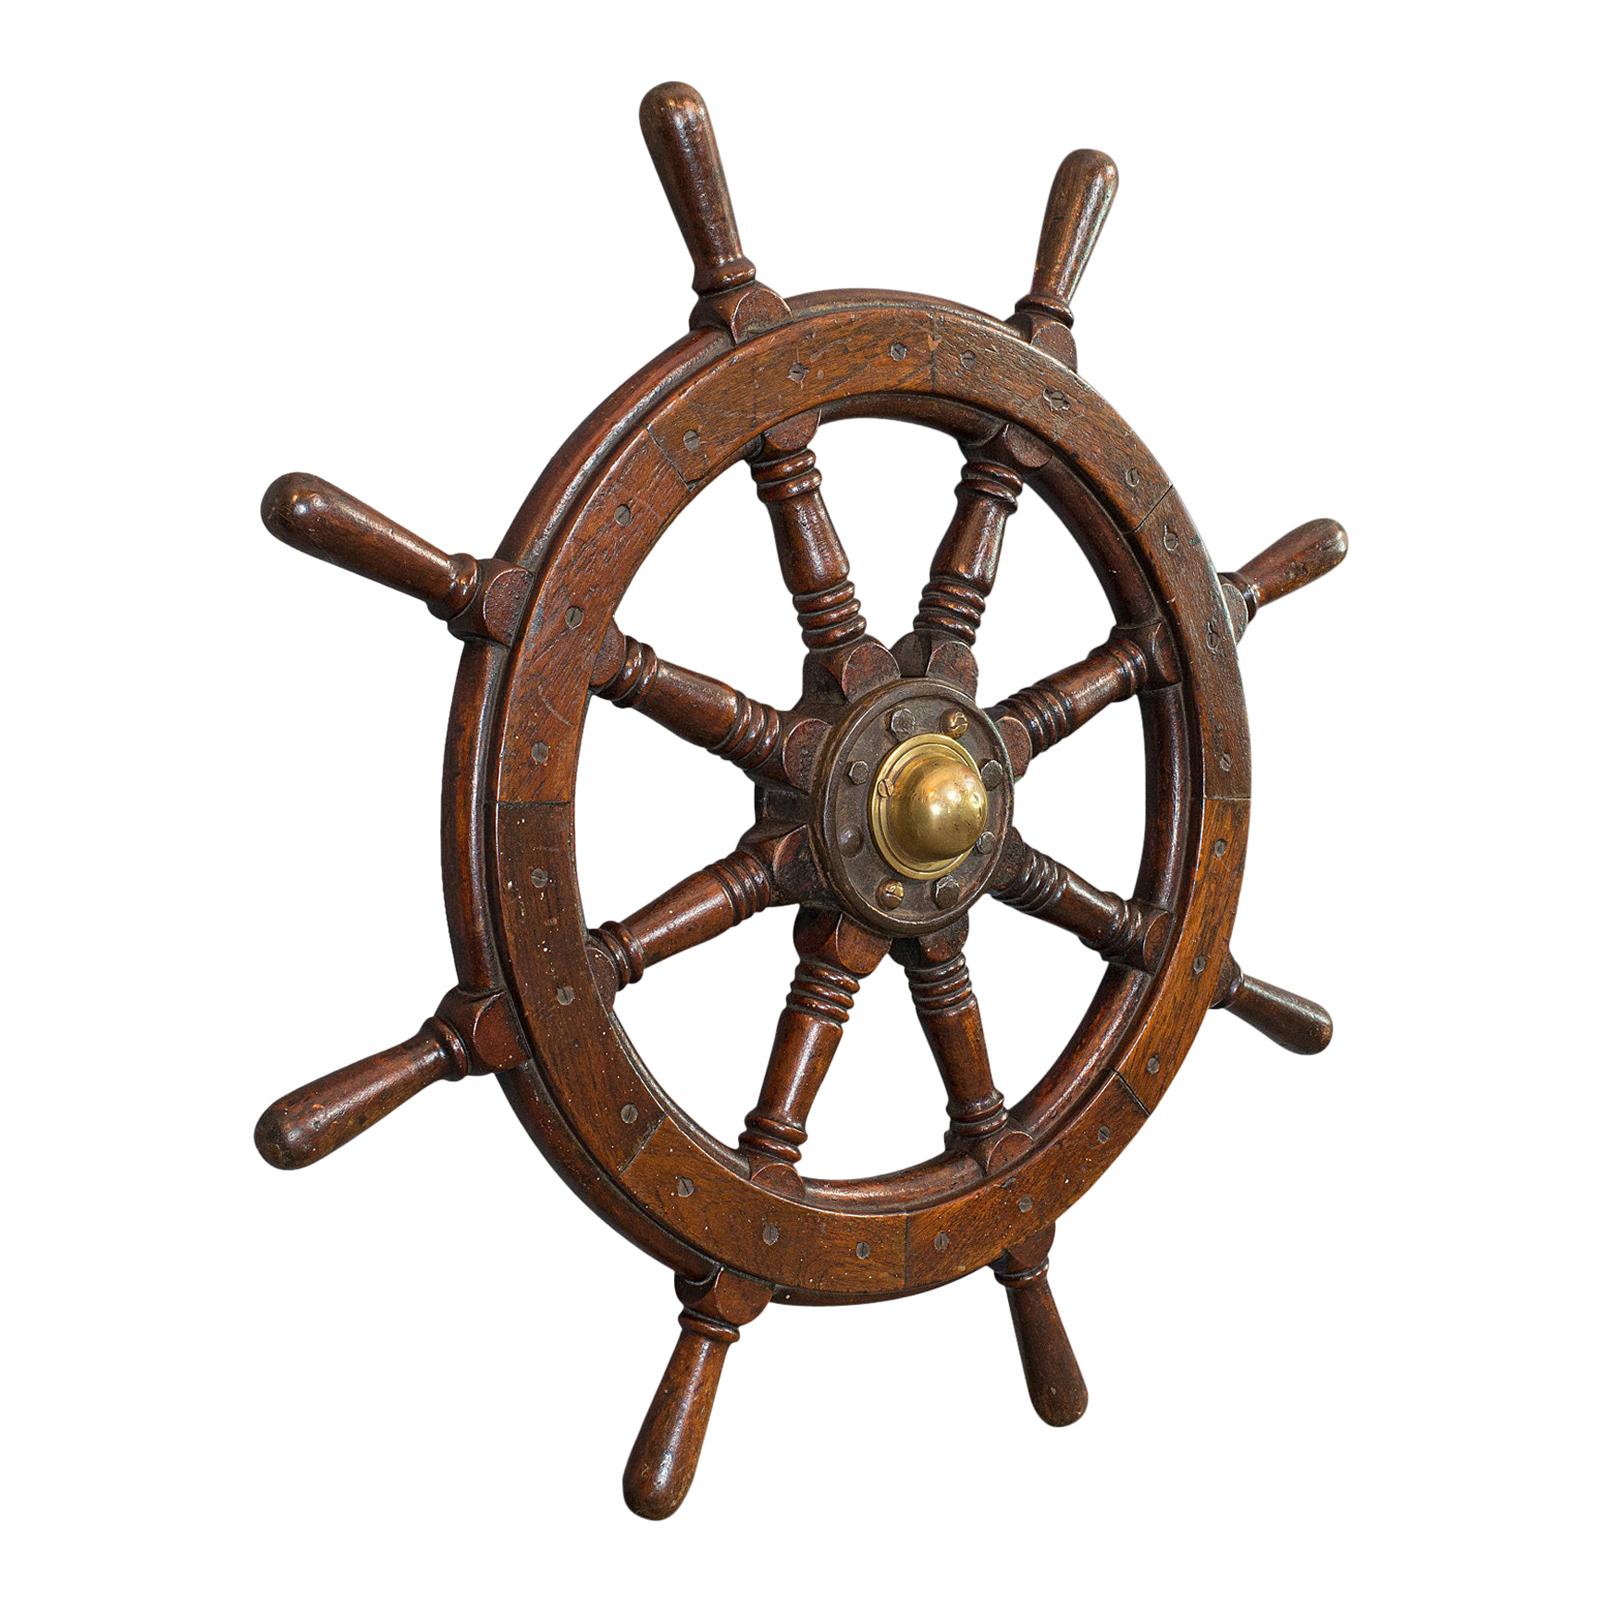 Antique Ship's Wheel, English, Oak, Brass, Maritime, Decorative, Victorian, 1900